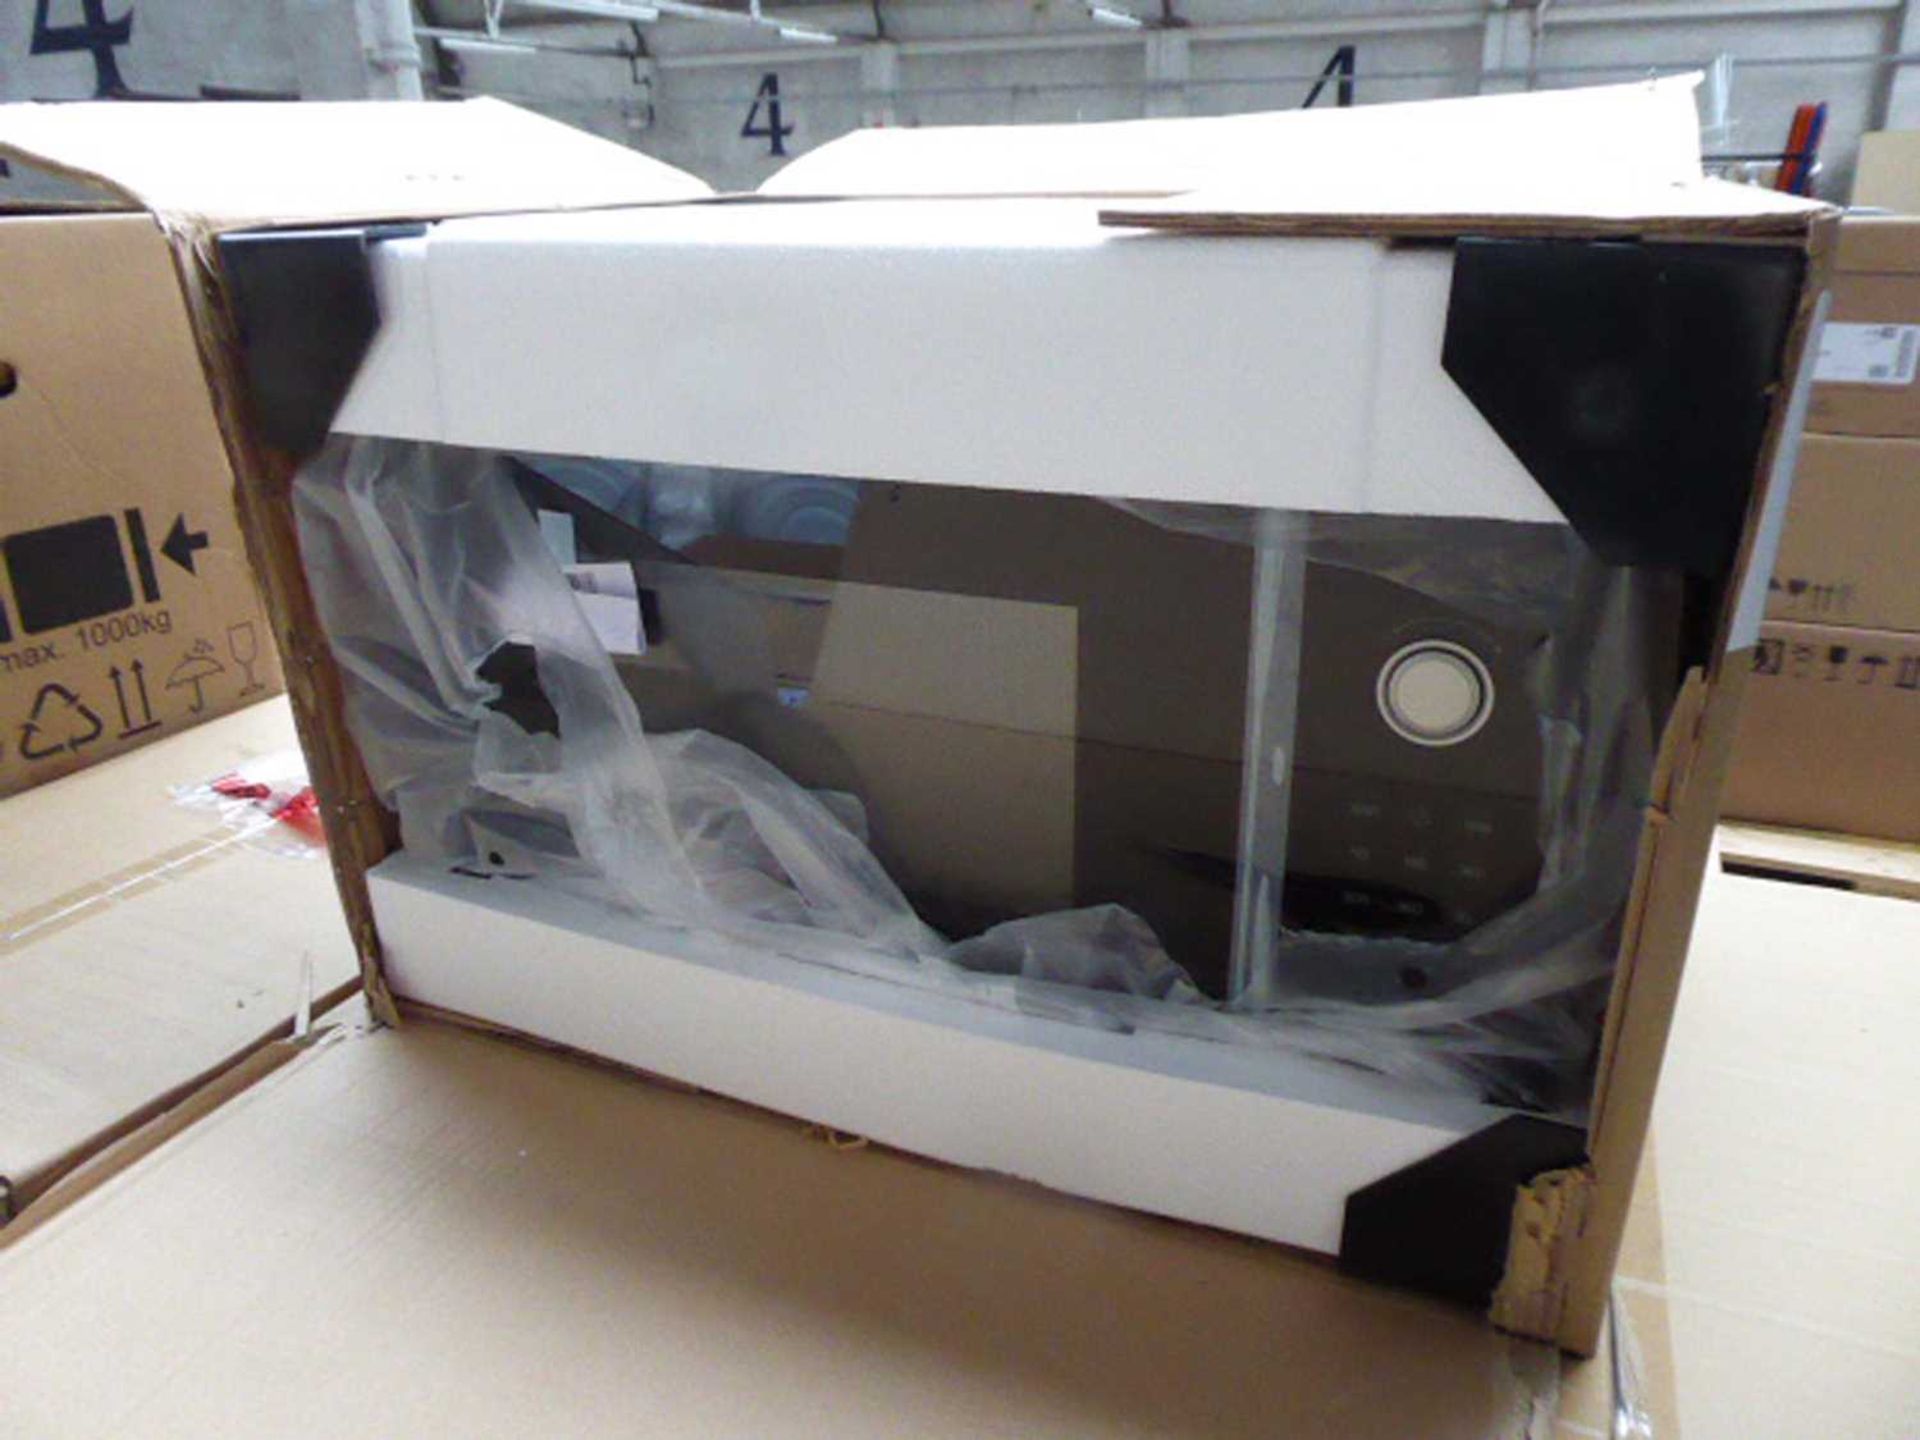 +VAT BFL553MS0BB - Bosch - Built-in microwave oven